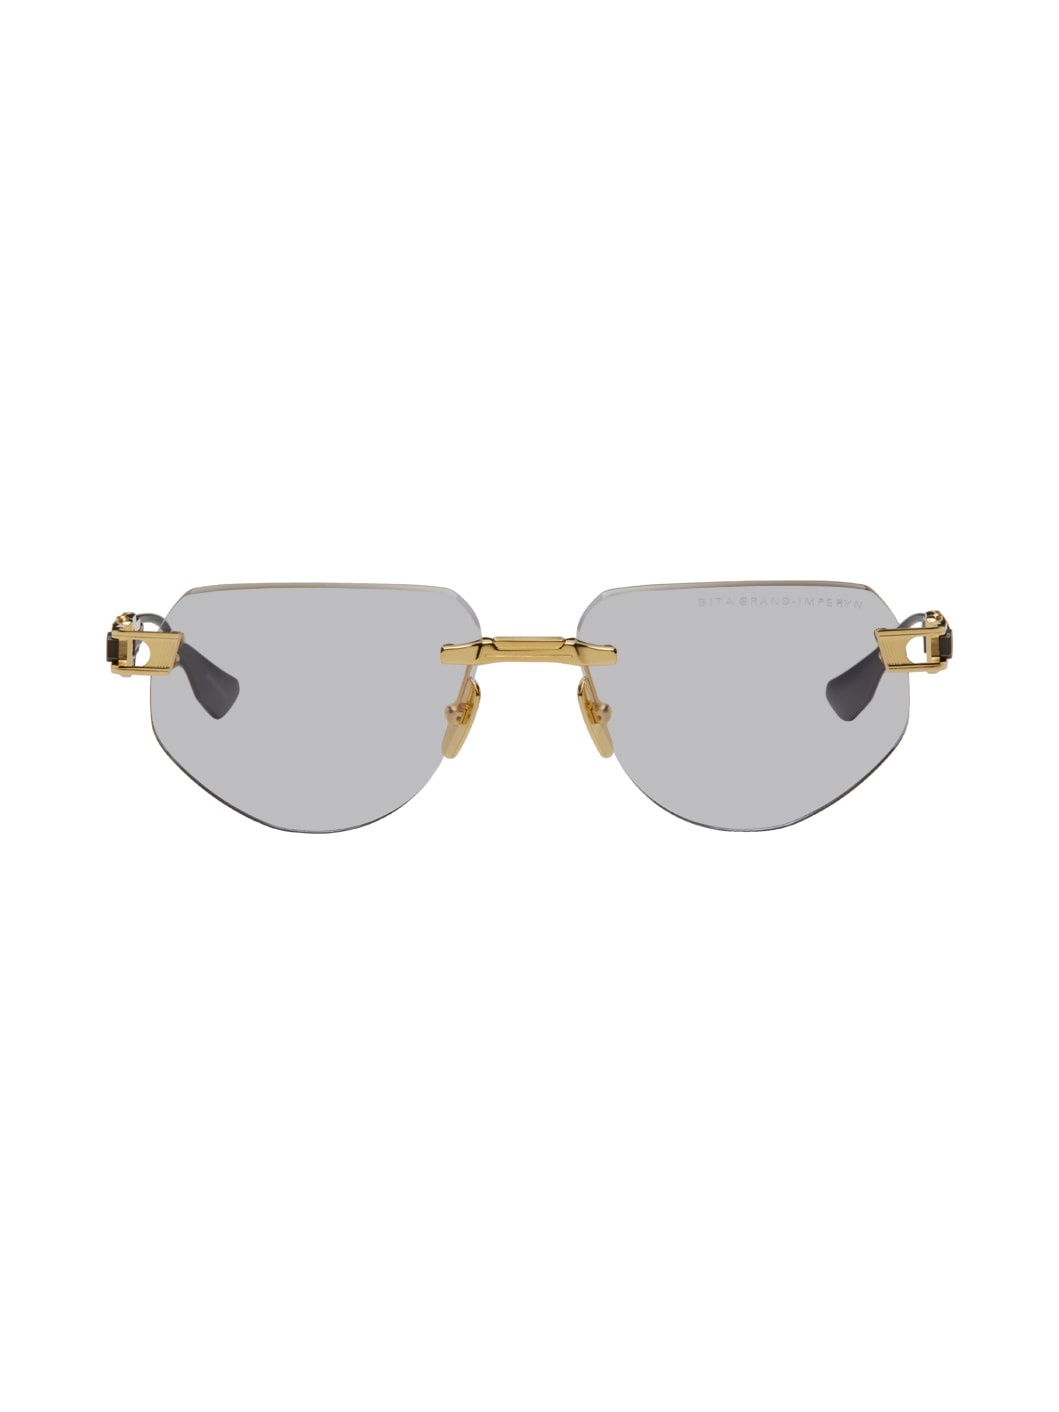 Gold & Black Grand-Imperyn Glasses - 1